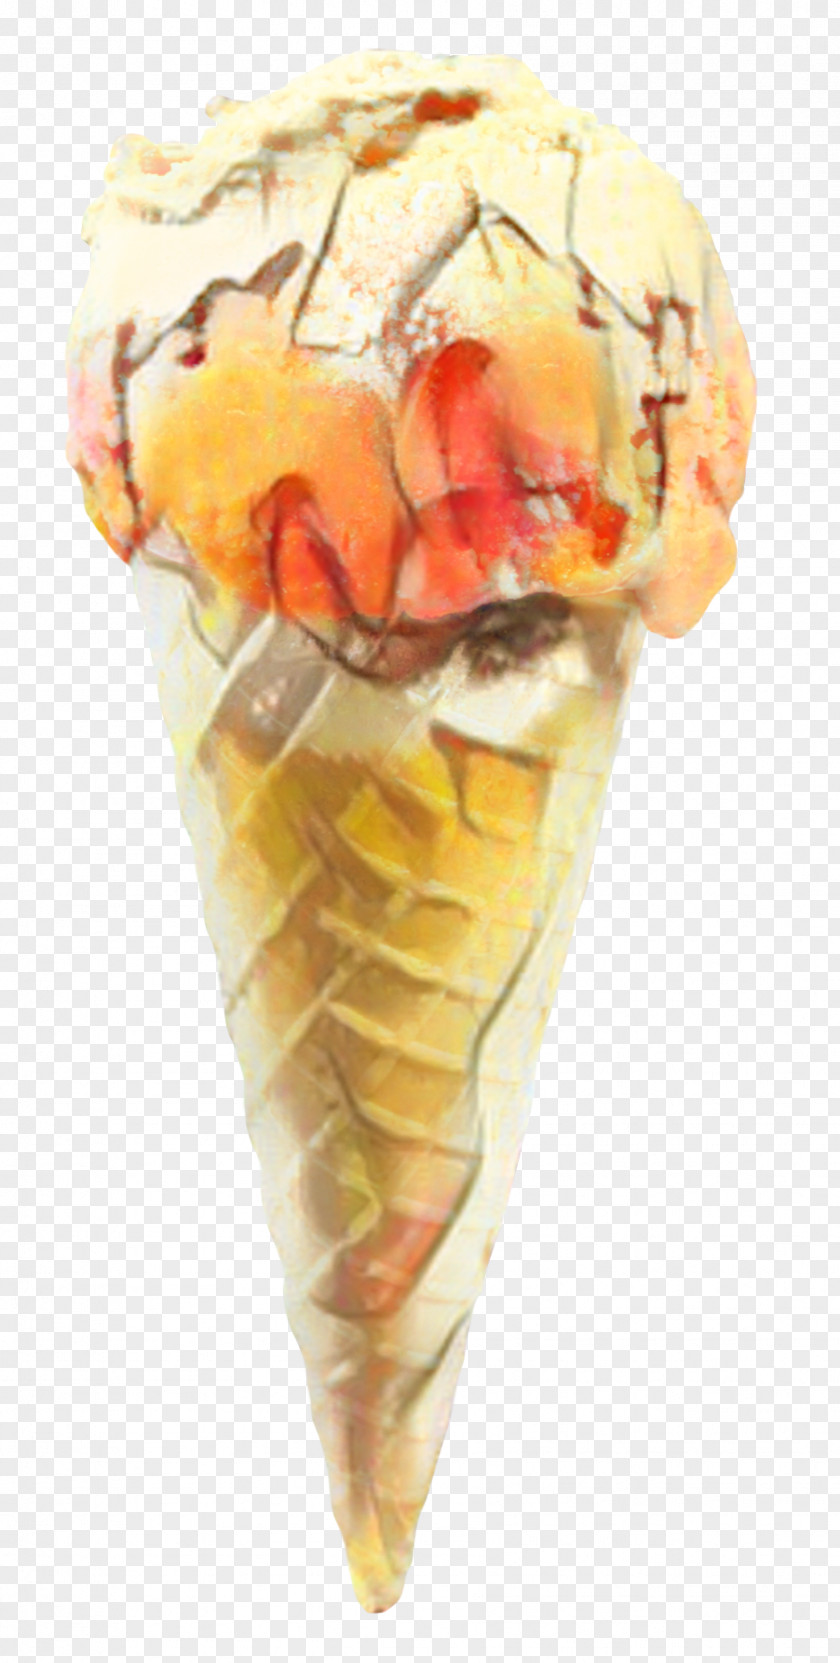 Dish Cuisine Ice Cream Cone Background PNG